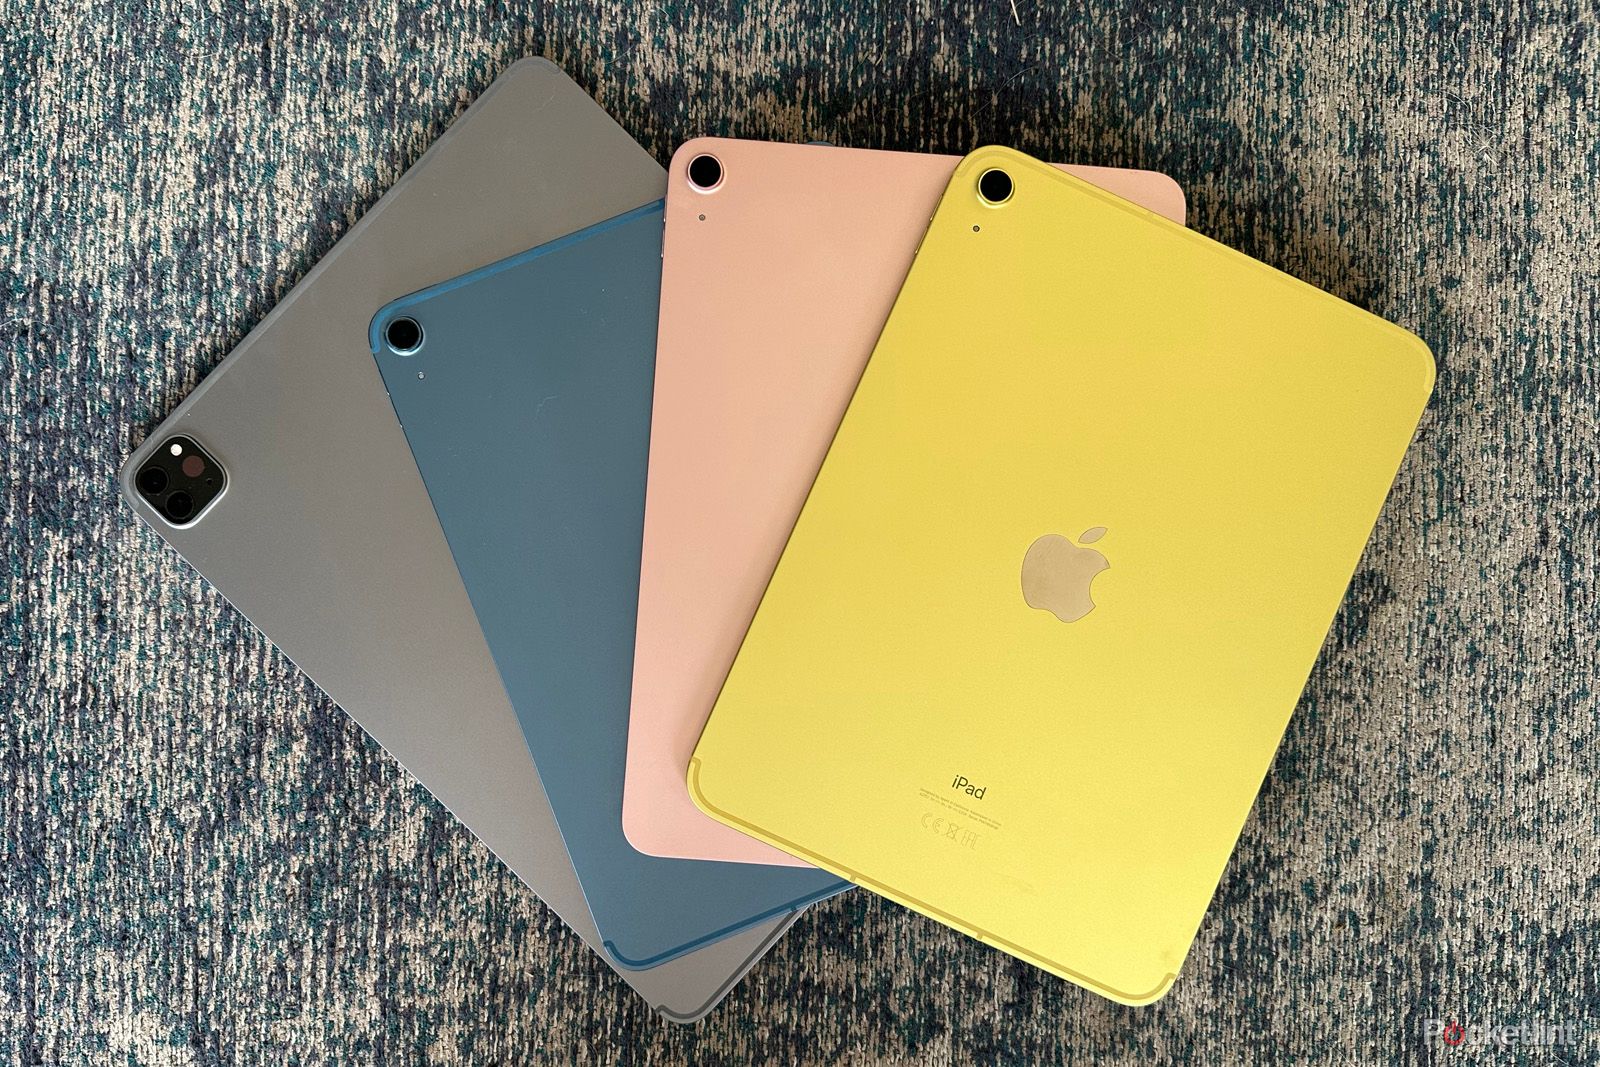 Apple iPad Air Wi-Fi - tablette - 64 Go - 9.7 Pas Cher